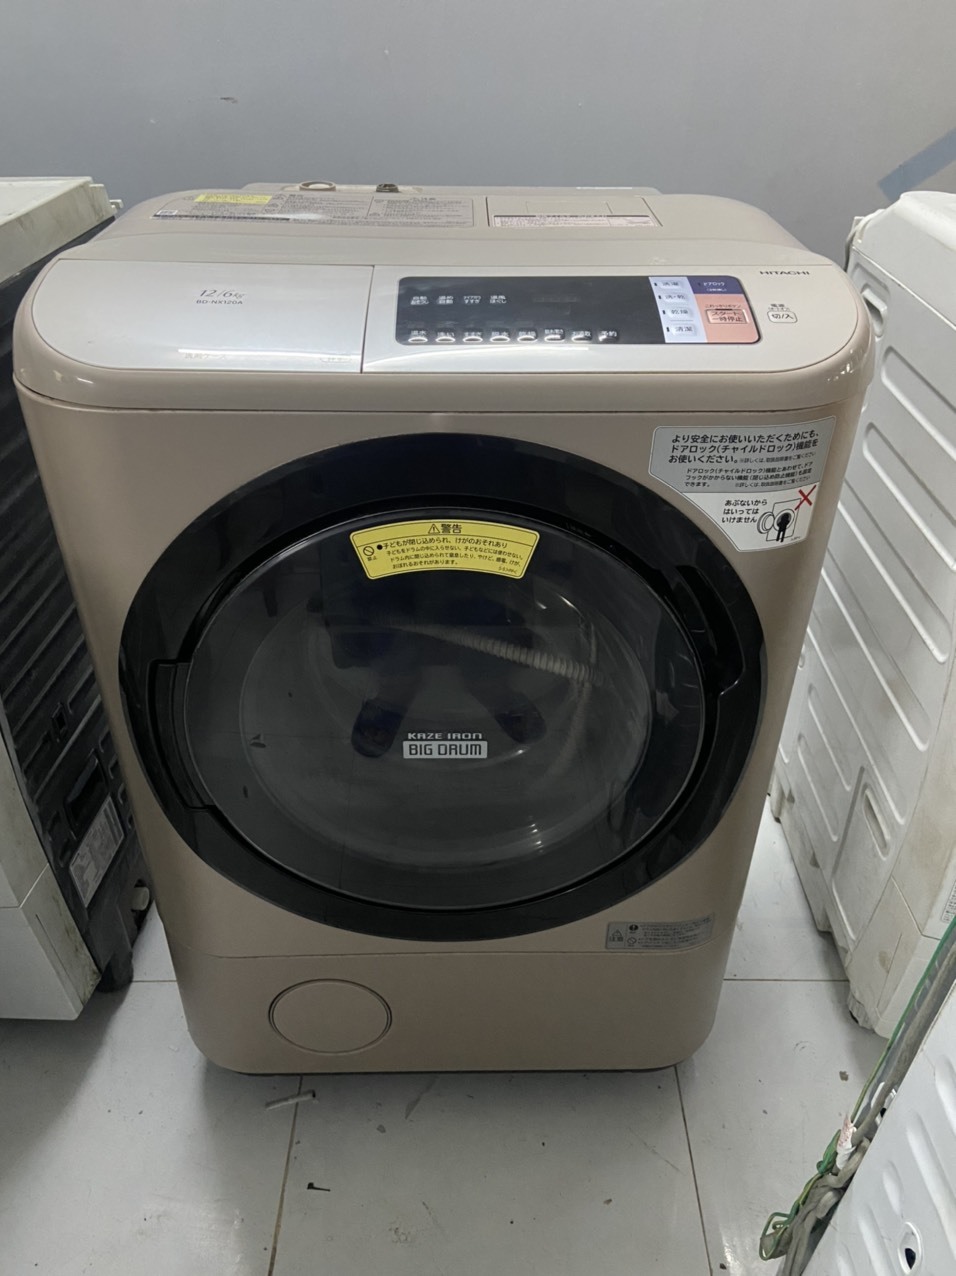 Máy giặt Hitachi Inverter 12 kg BD-NX120AL